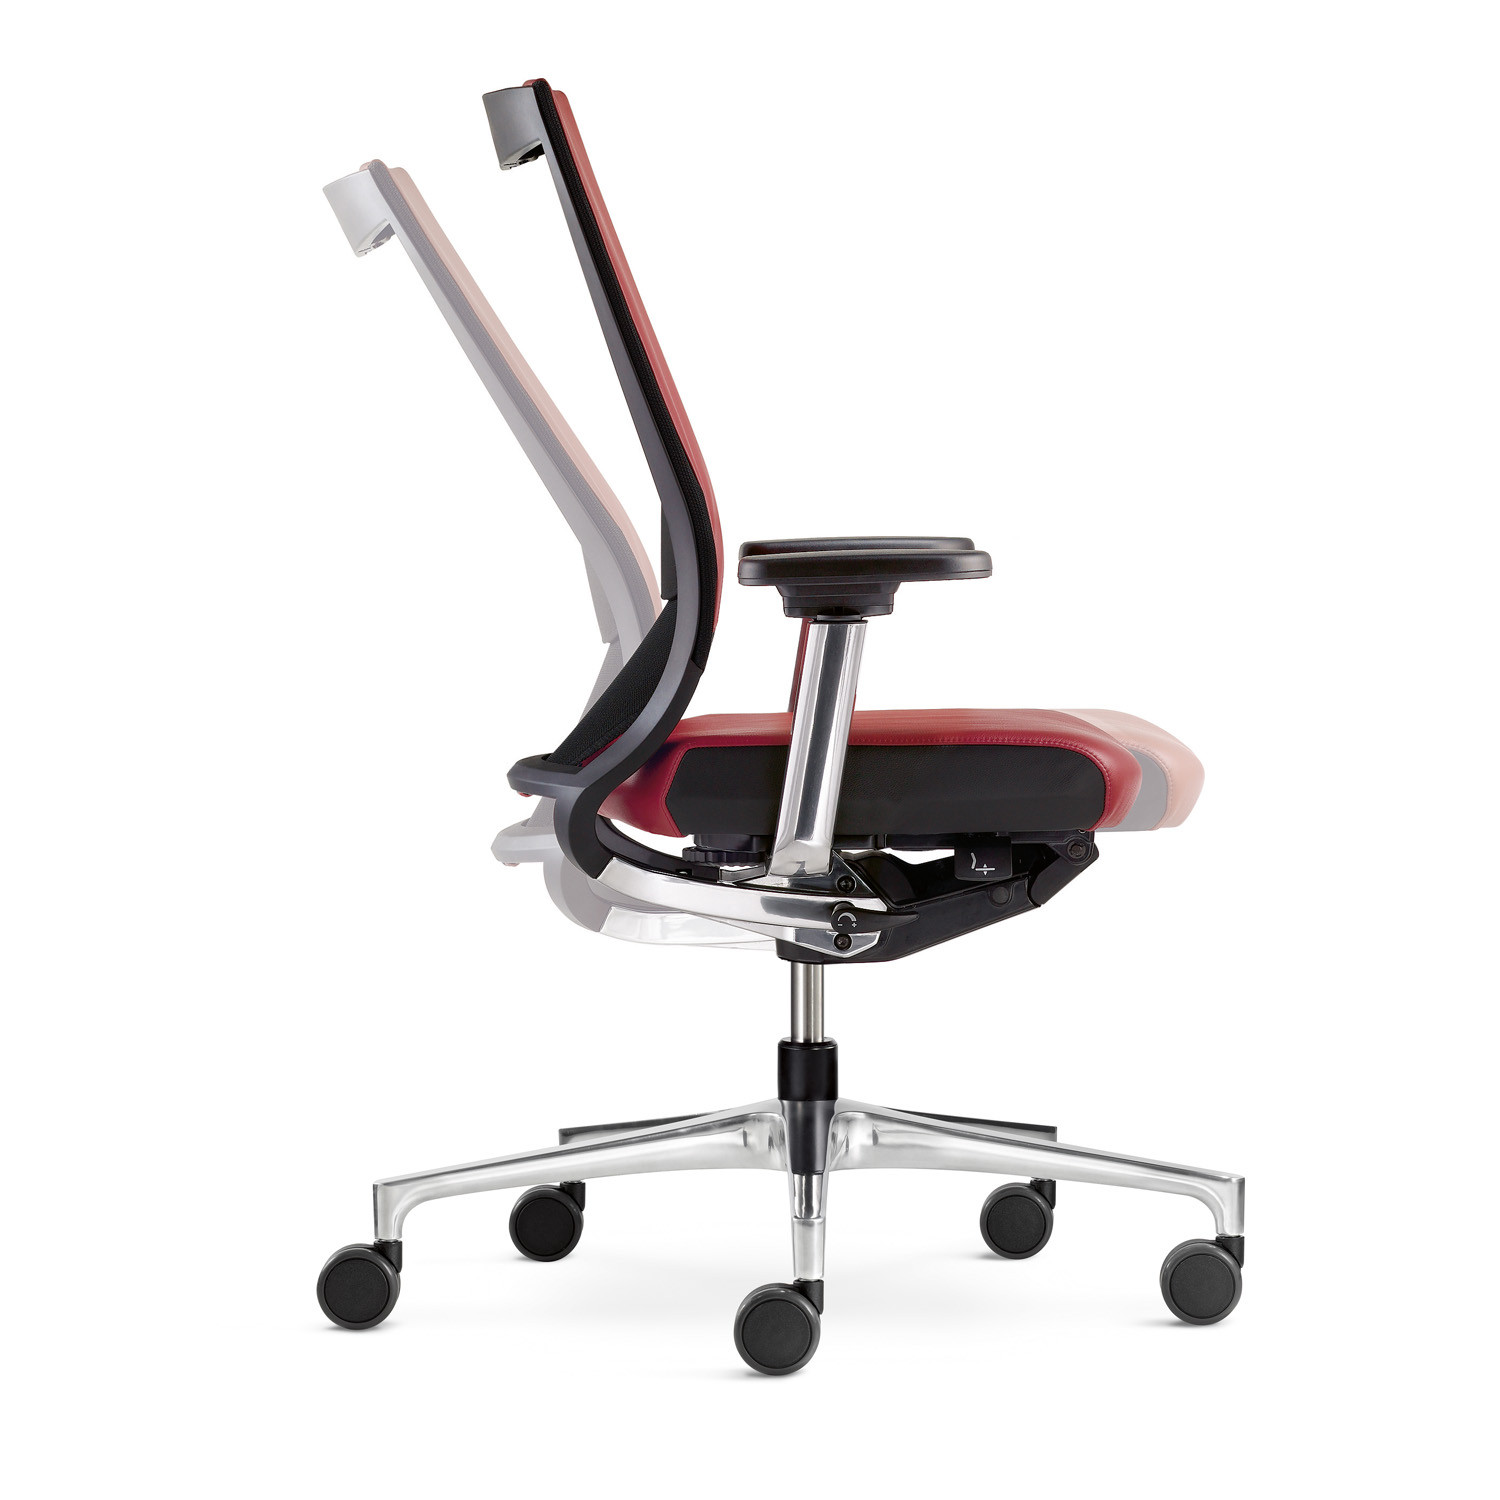 Duera Ergonomic Office Chair